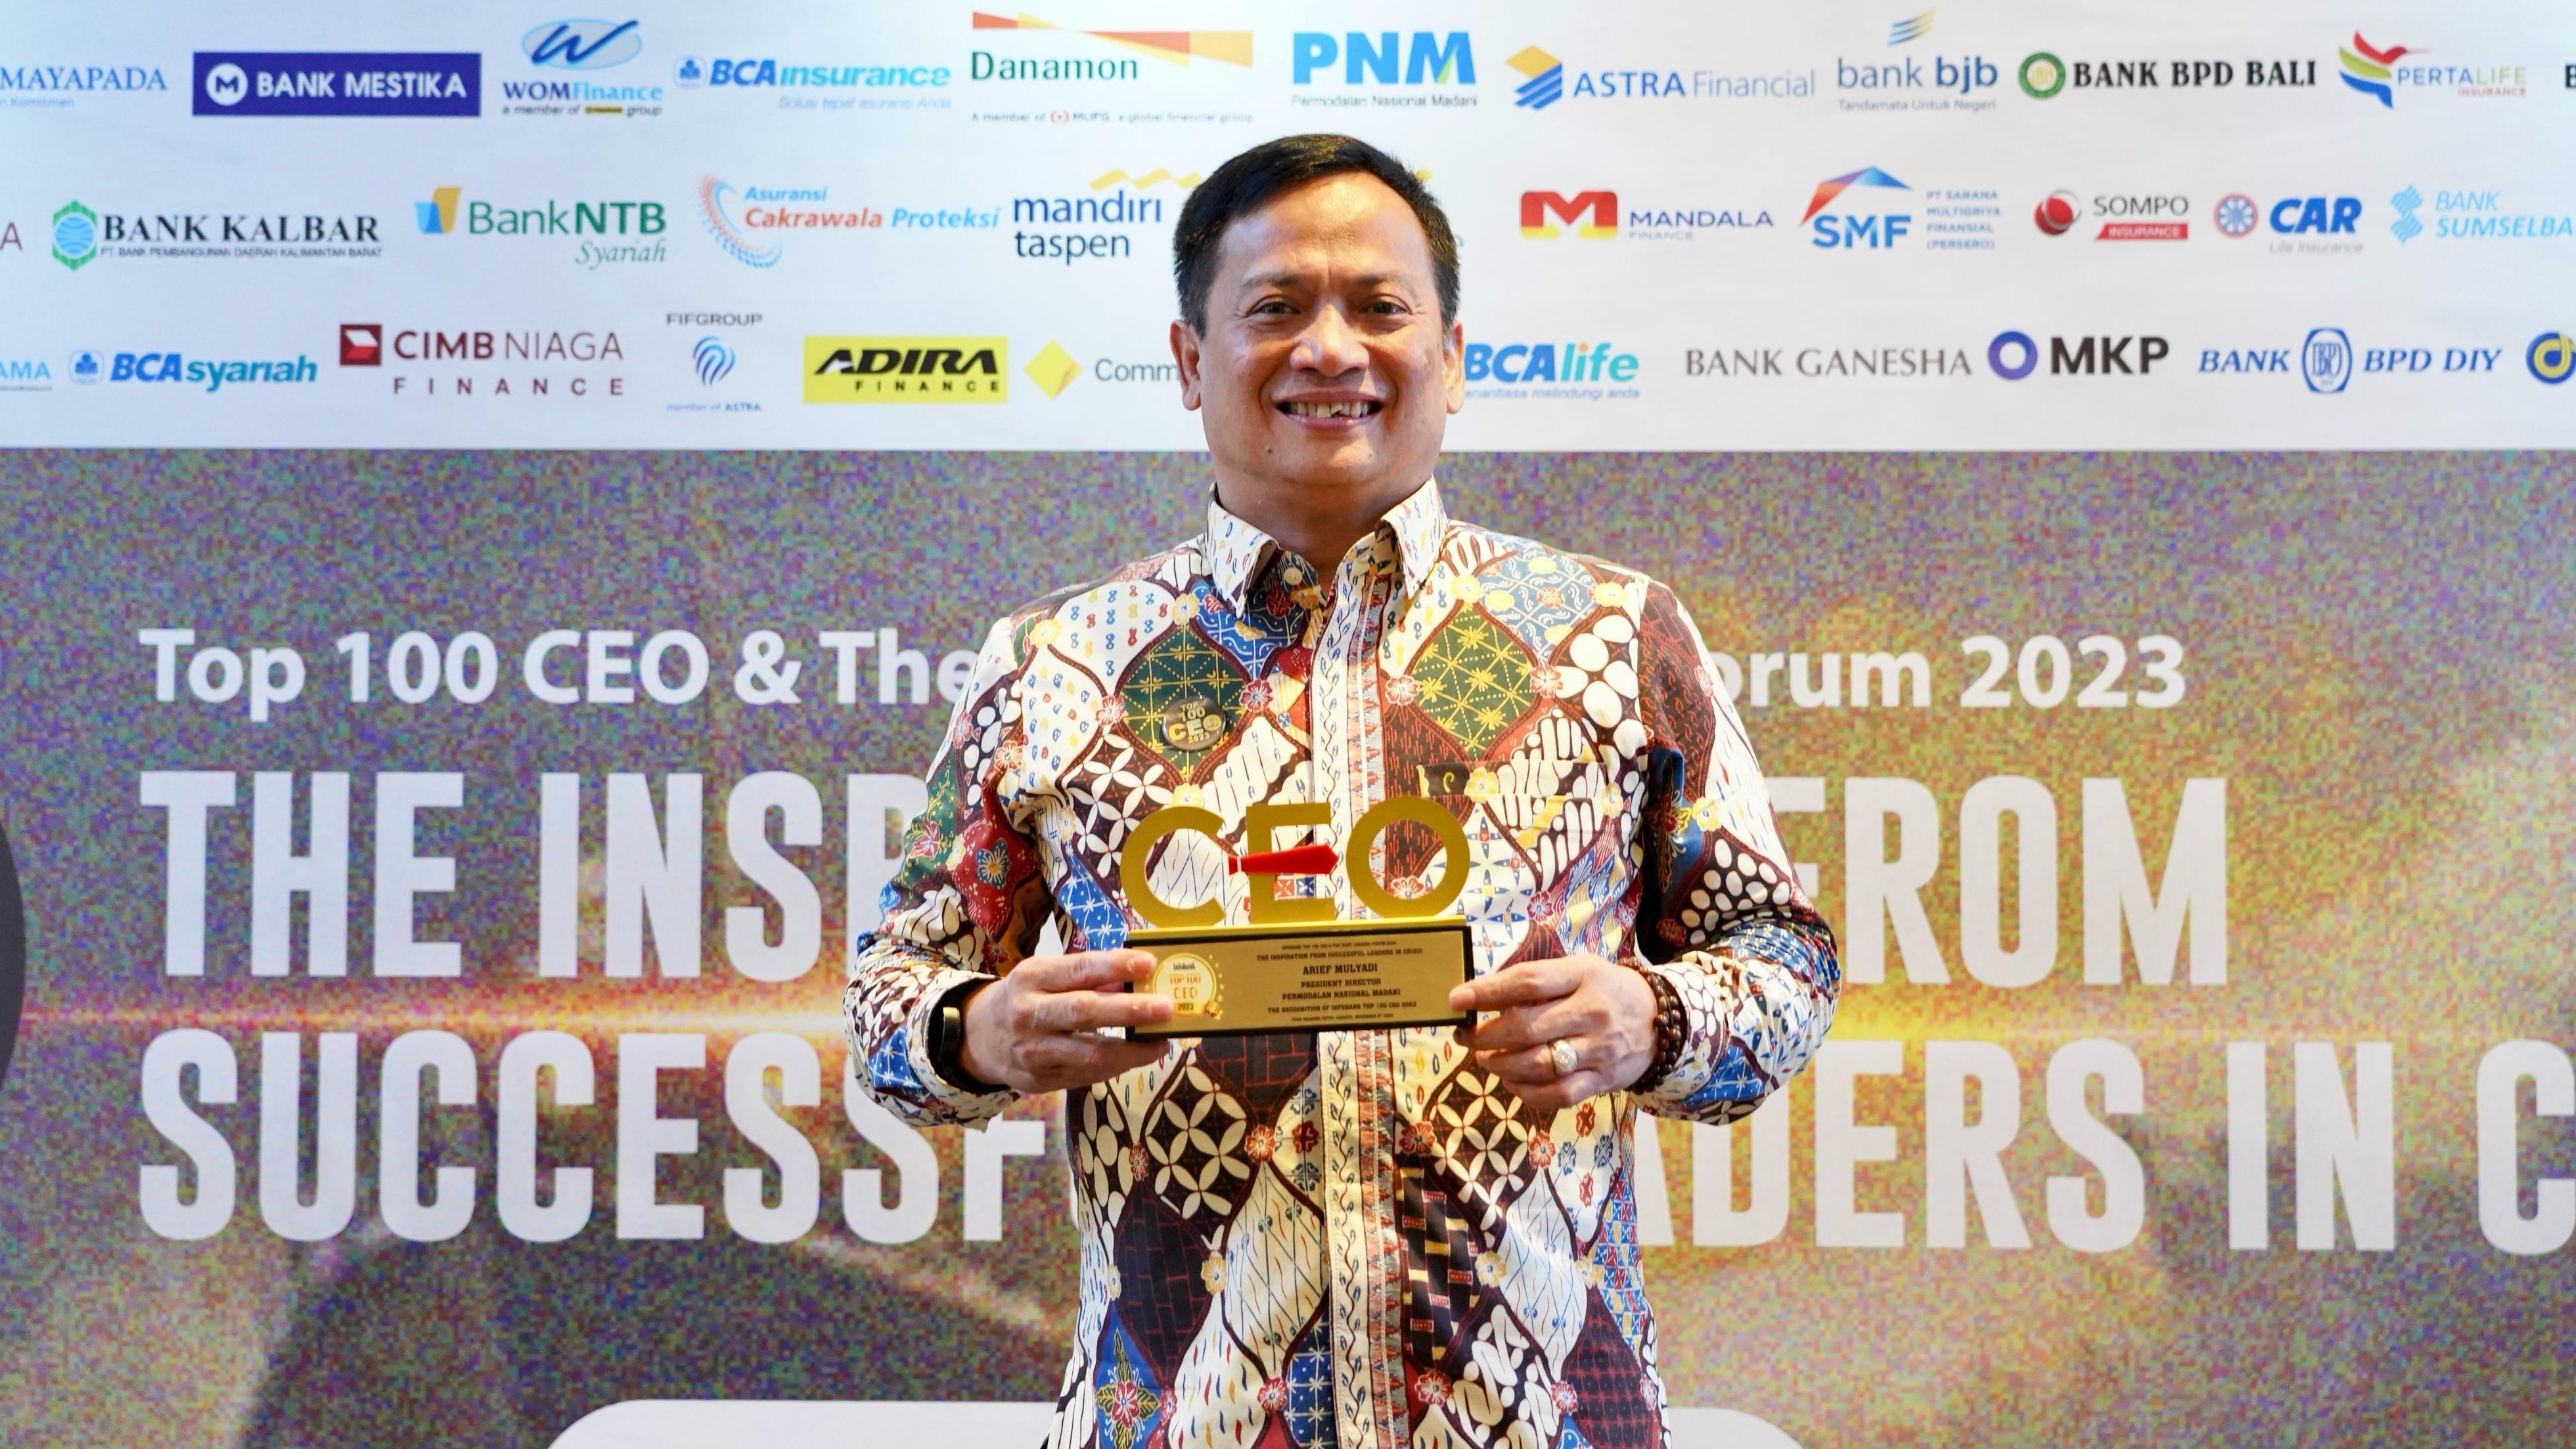 Direktur Utama Permodalan Nasional Madani (PNM) Arief Mulyadi